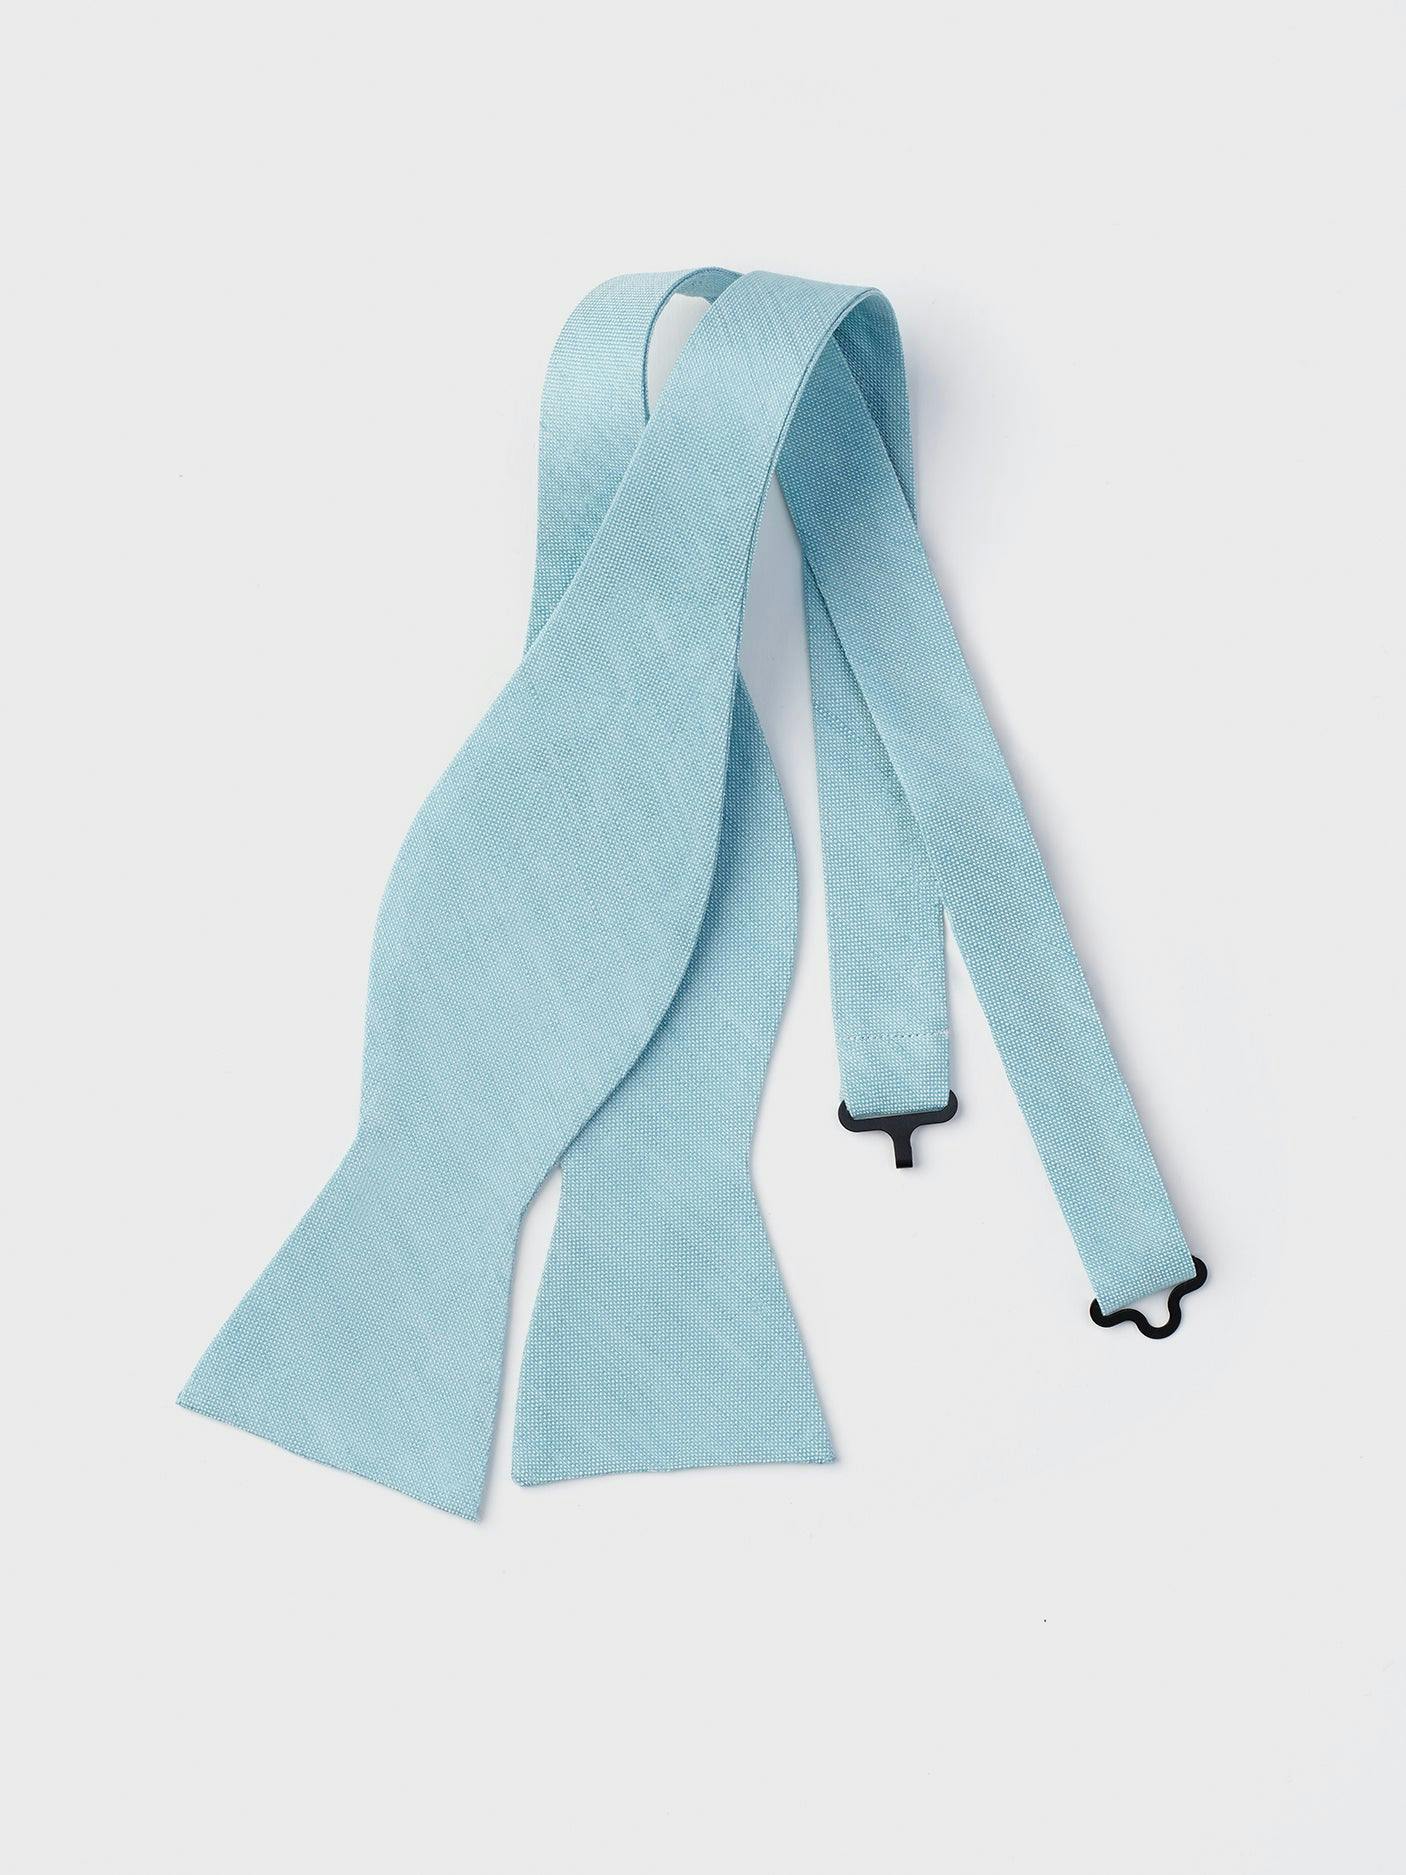 Mint Linen/Silk Bow Tie